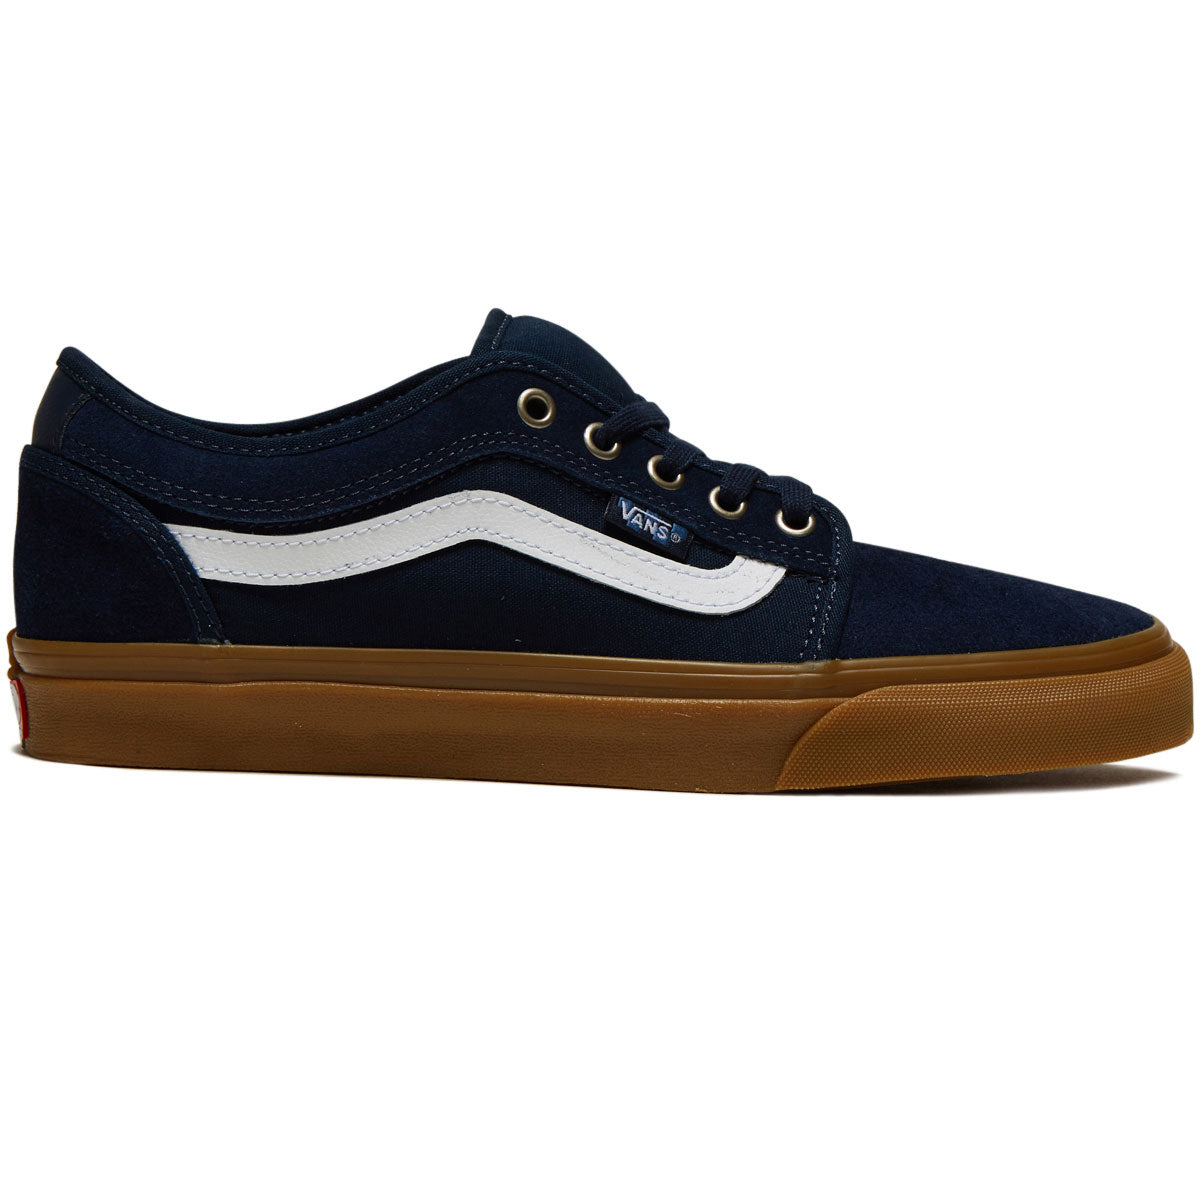 Vans Skate Chukka Low Sidestripe Shoes - Navy/Gum image 1